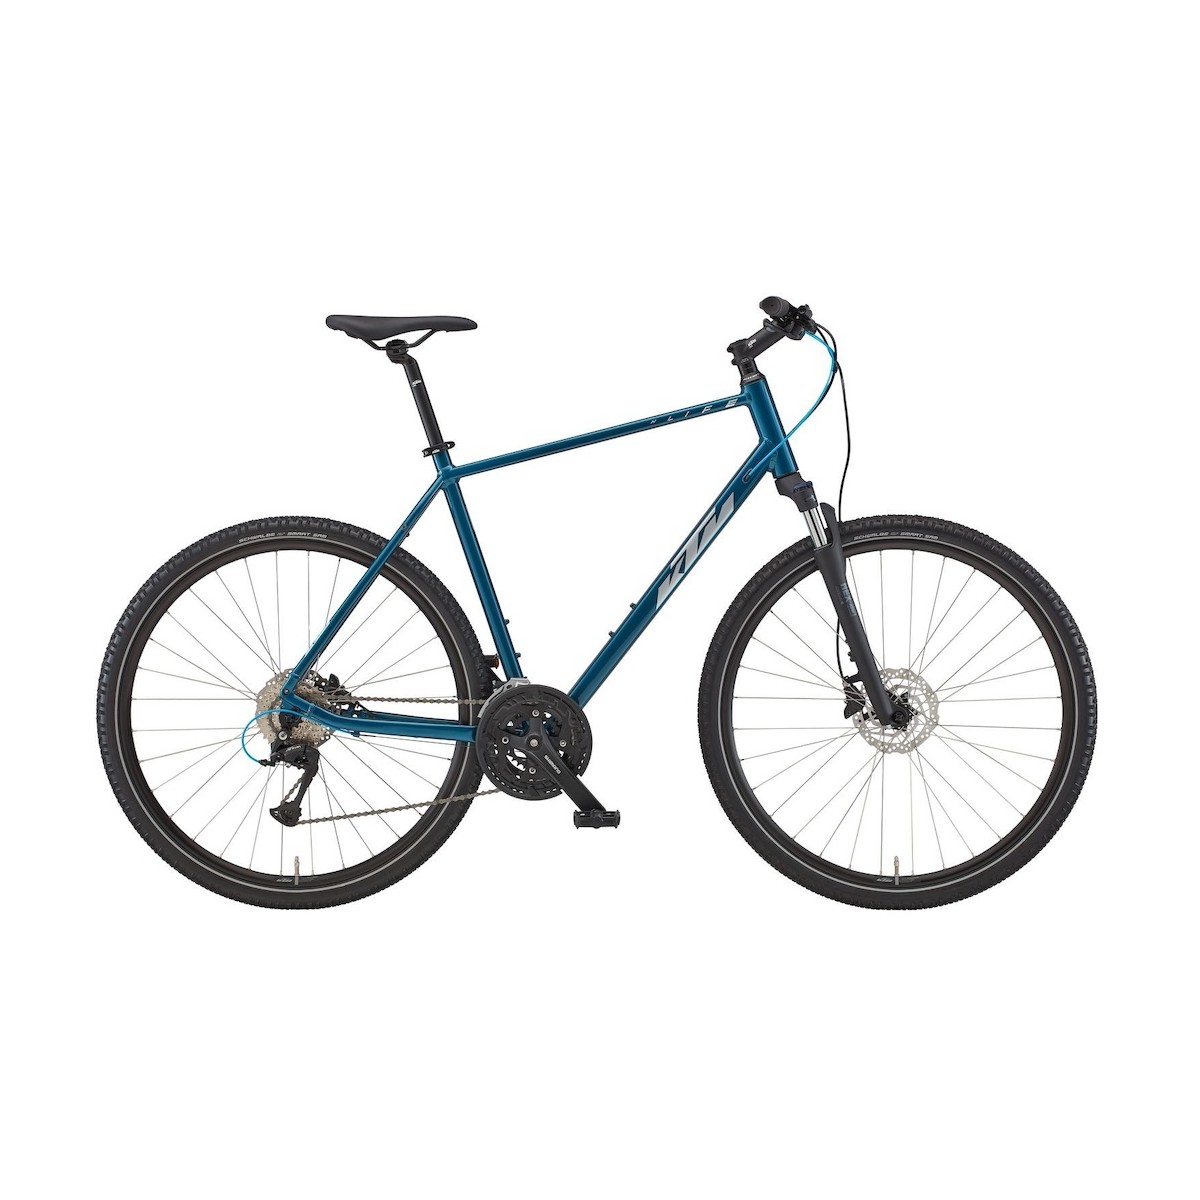 KTM X-LIFE ROAD bicycle - blue - 2022